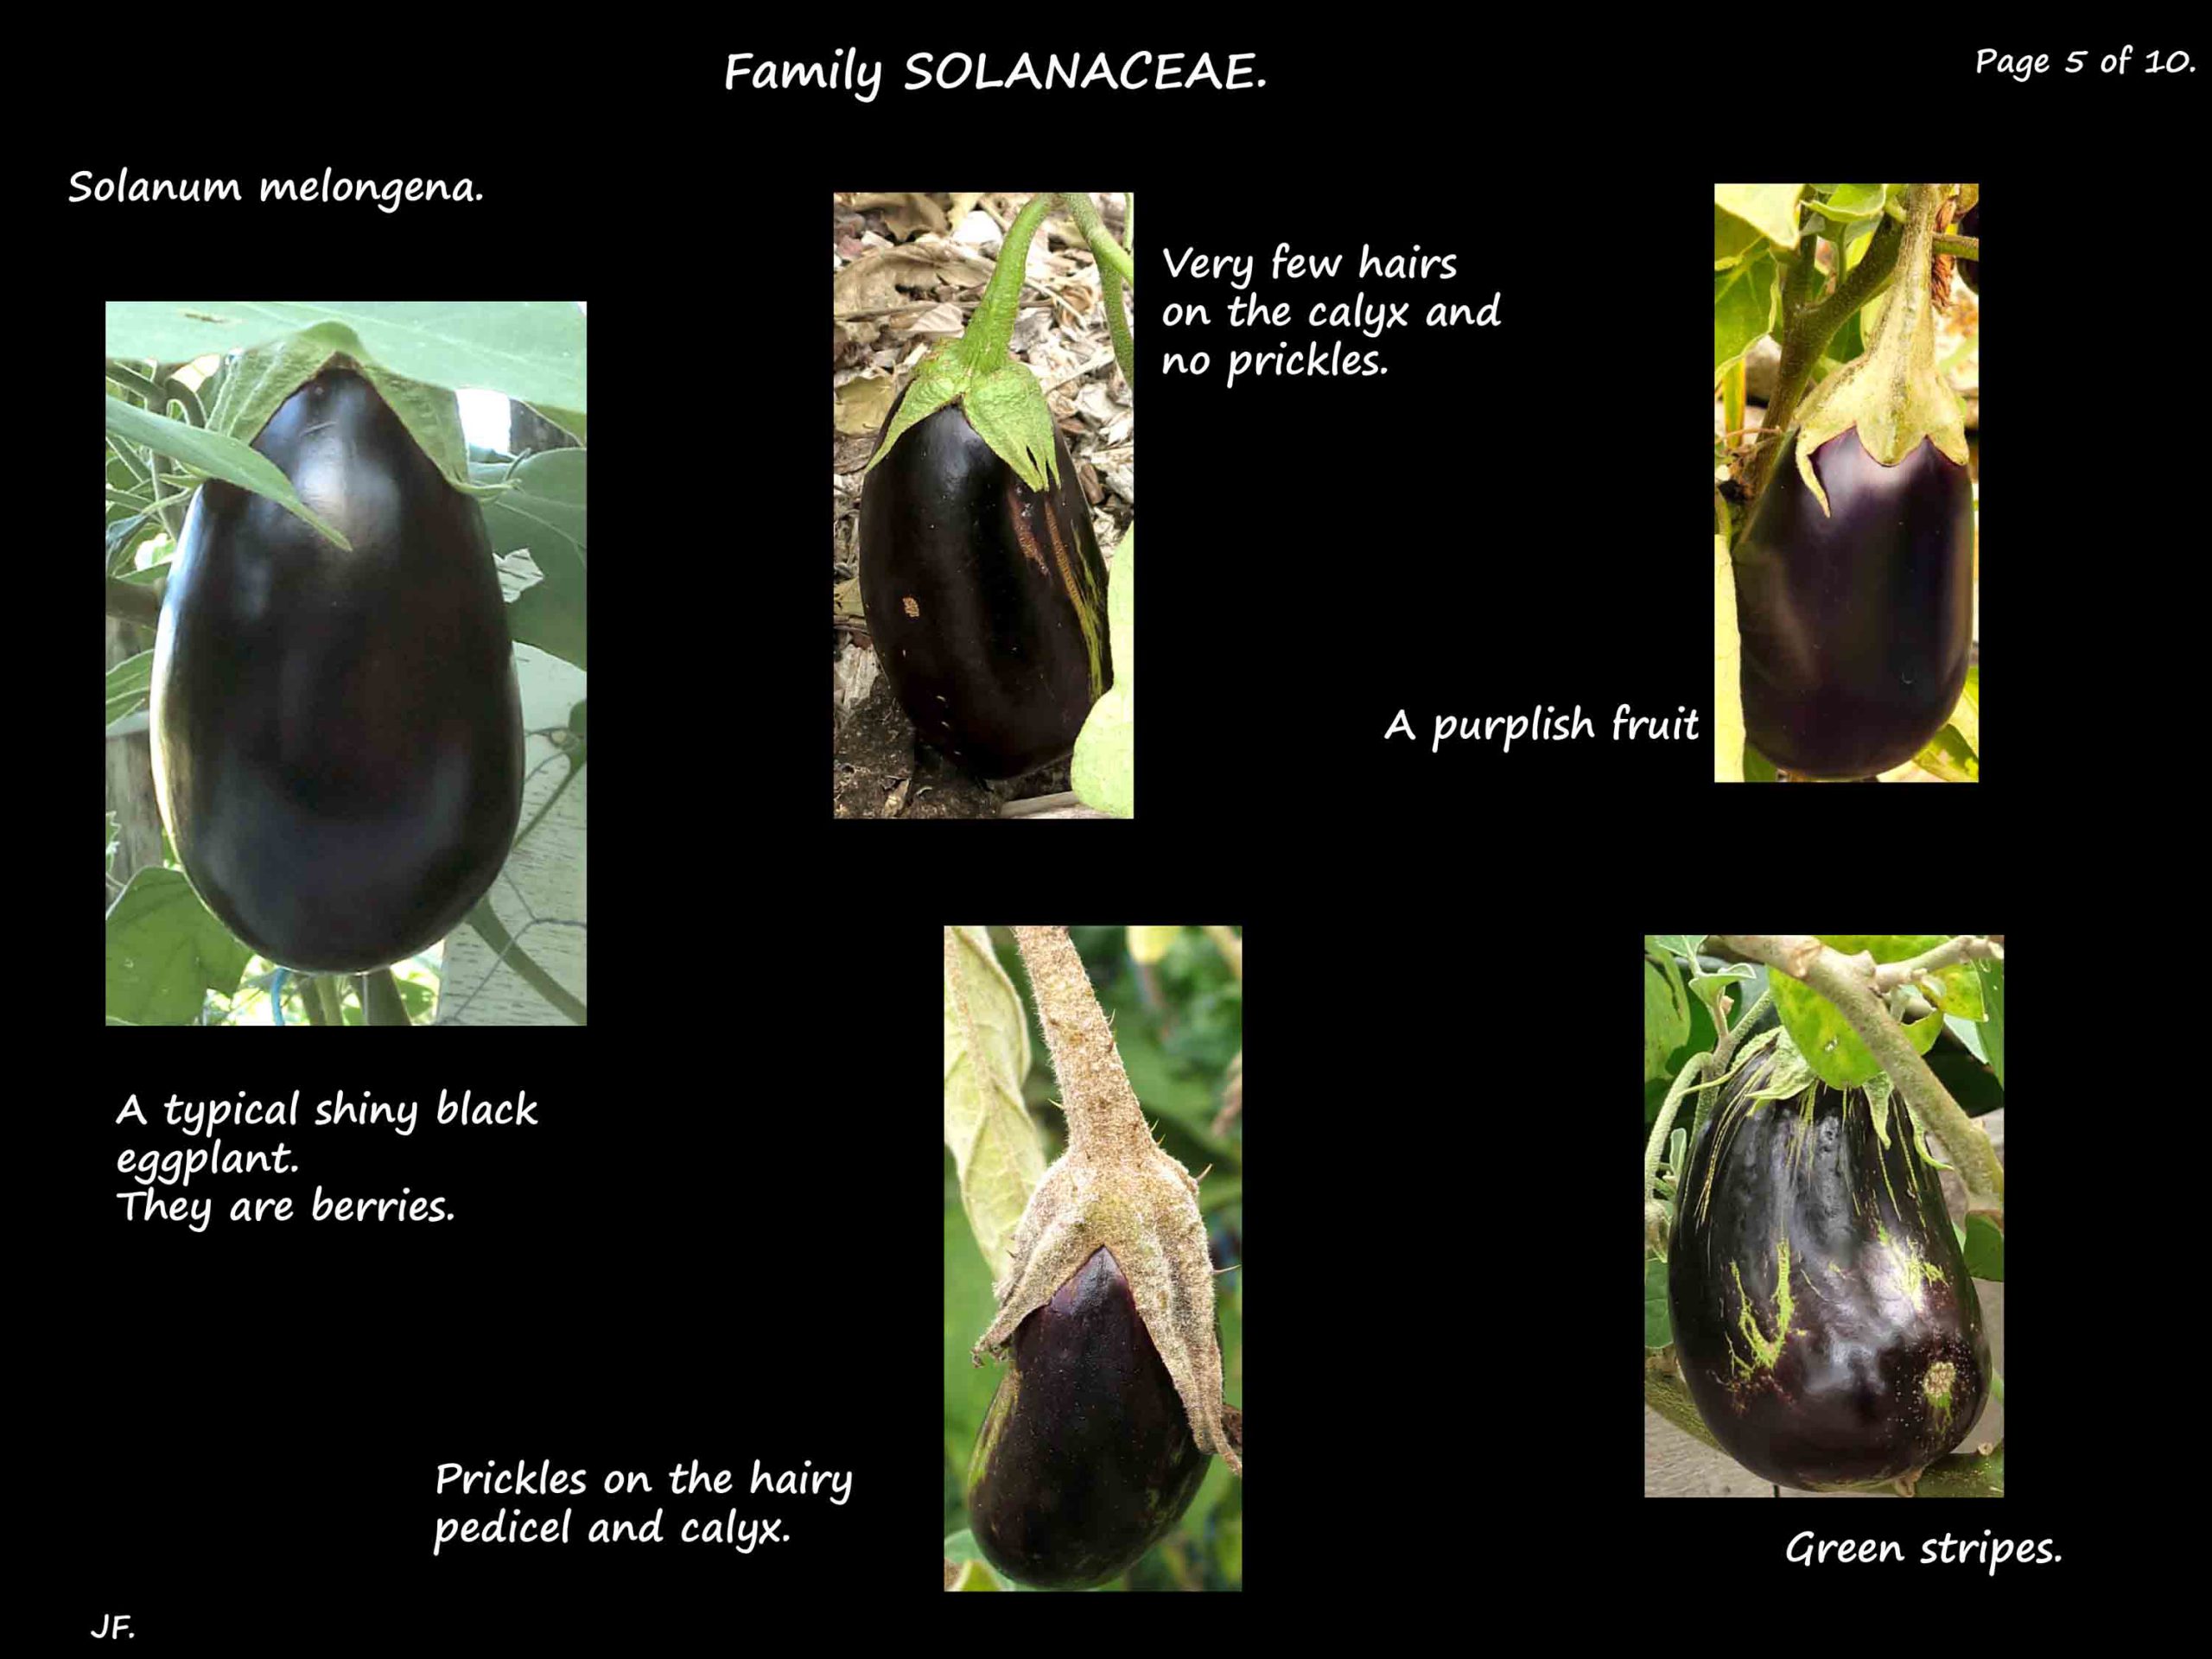 5 Black eggplants